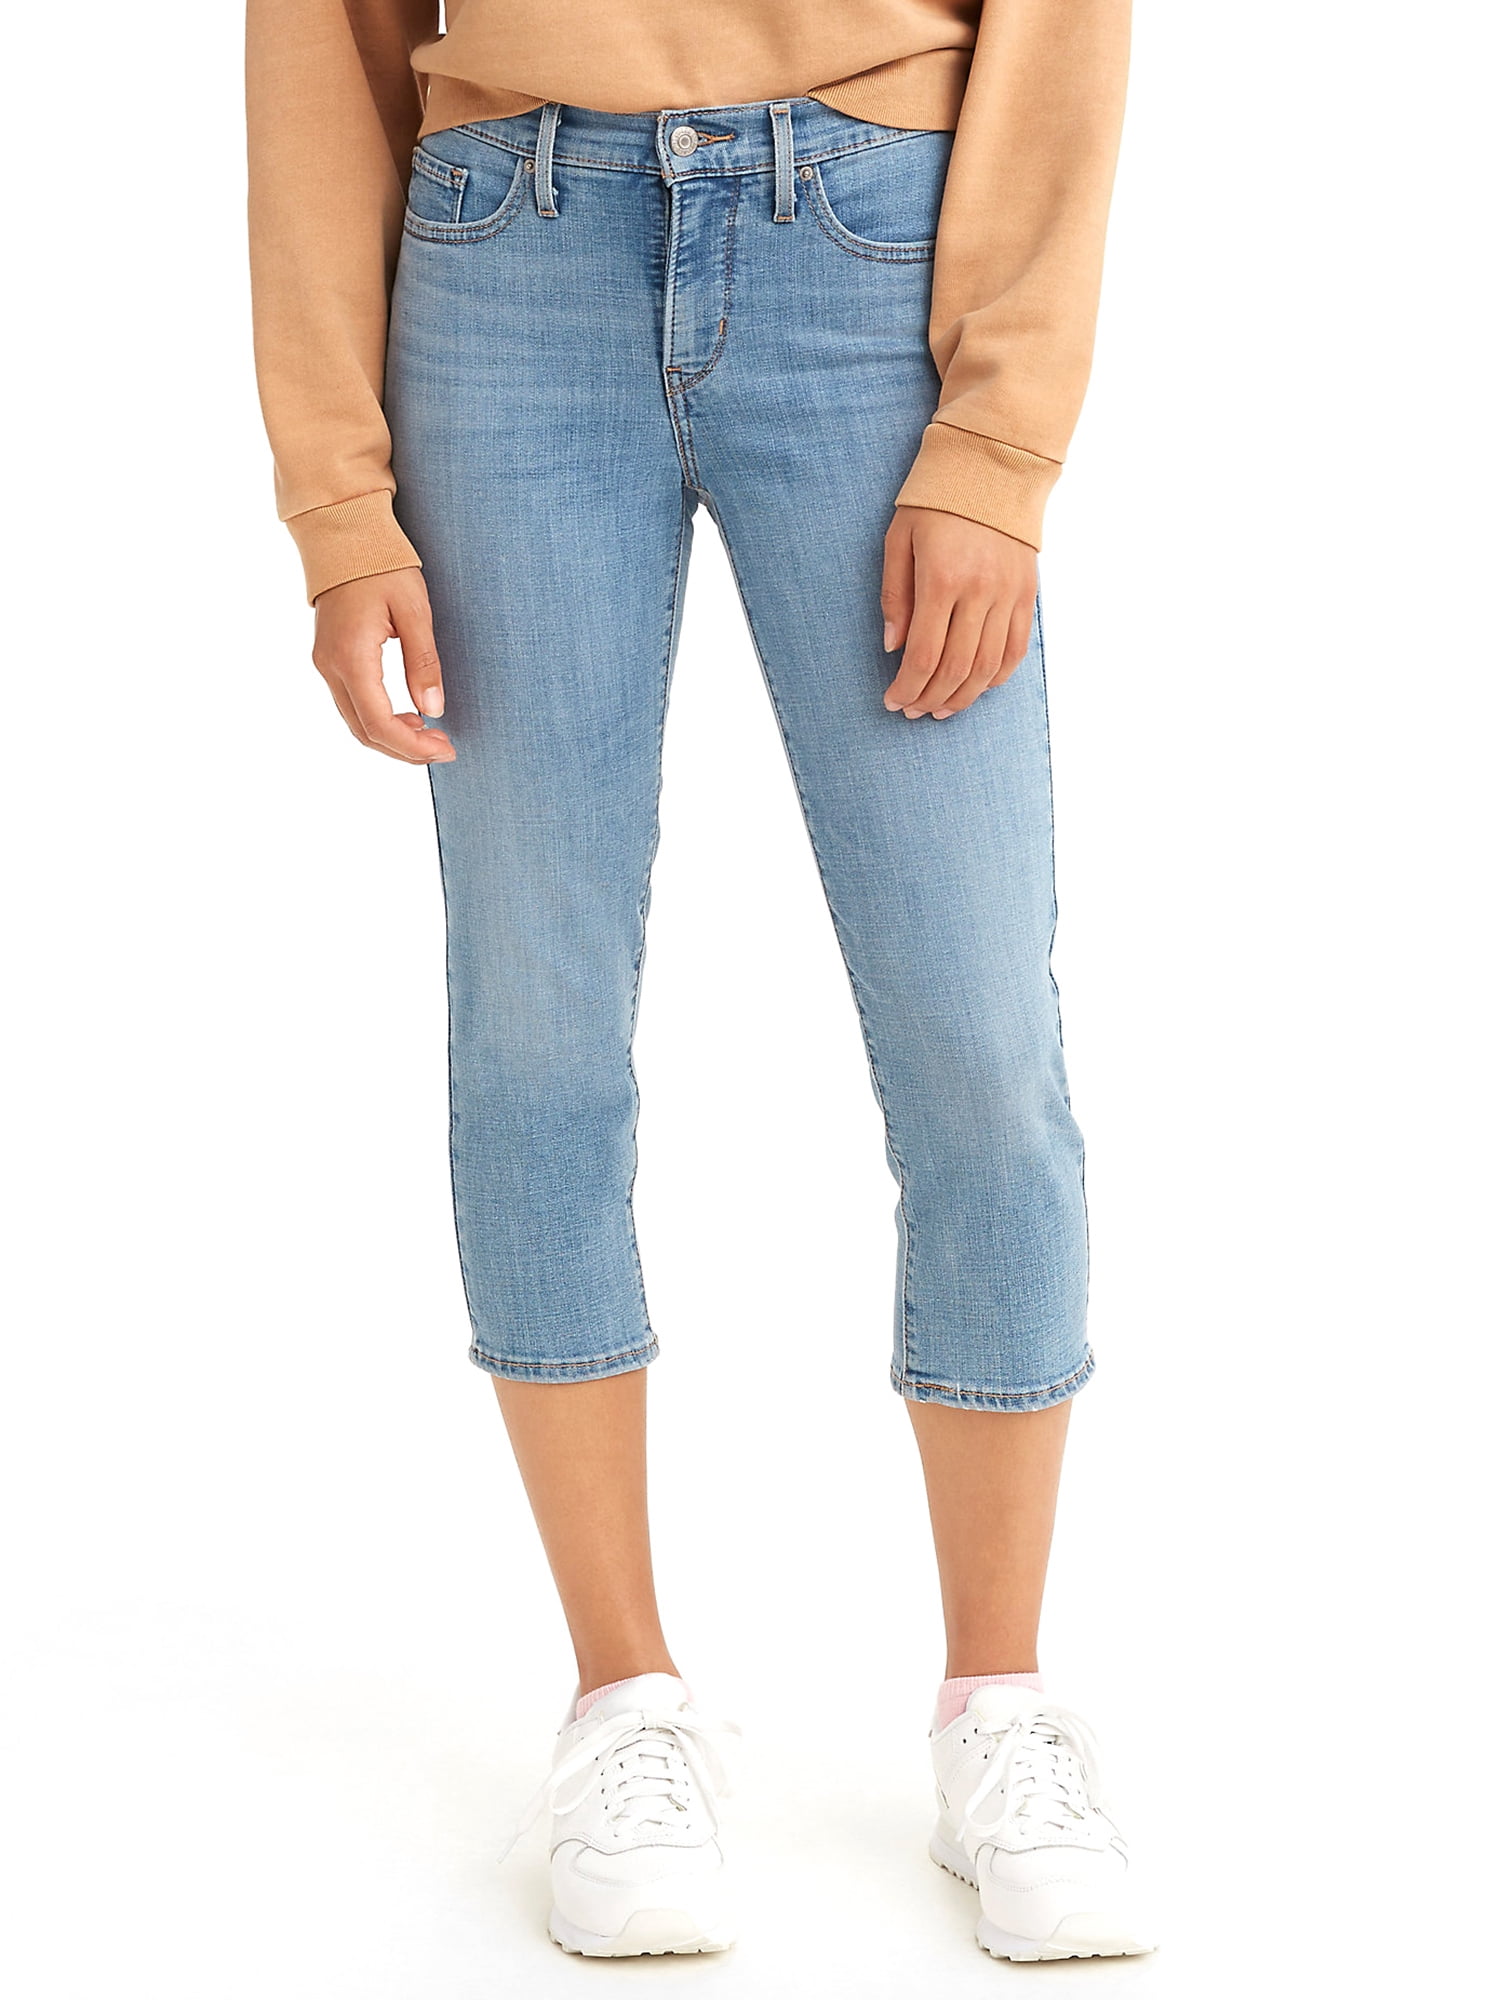 Levi's Original Red Tab Women's 311 Shaping Skinny Capri Jeans 